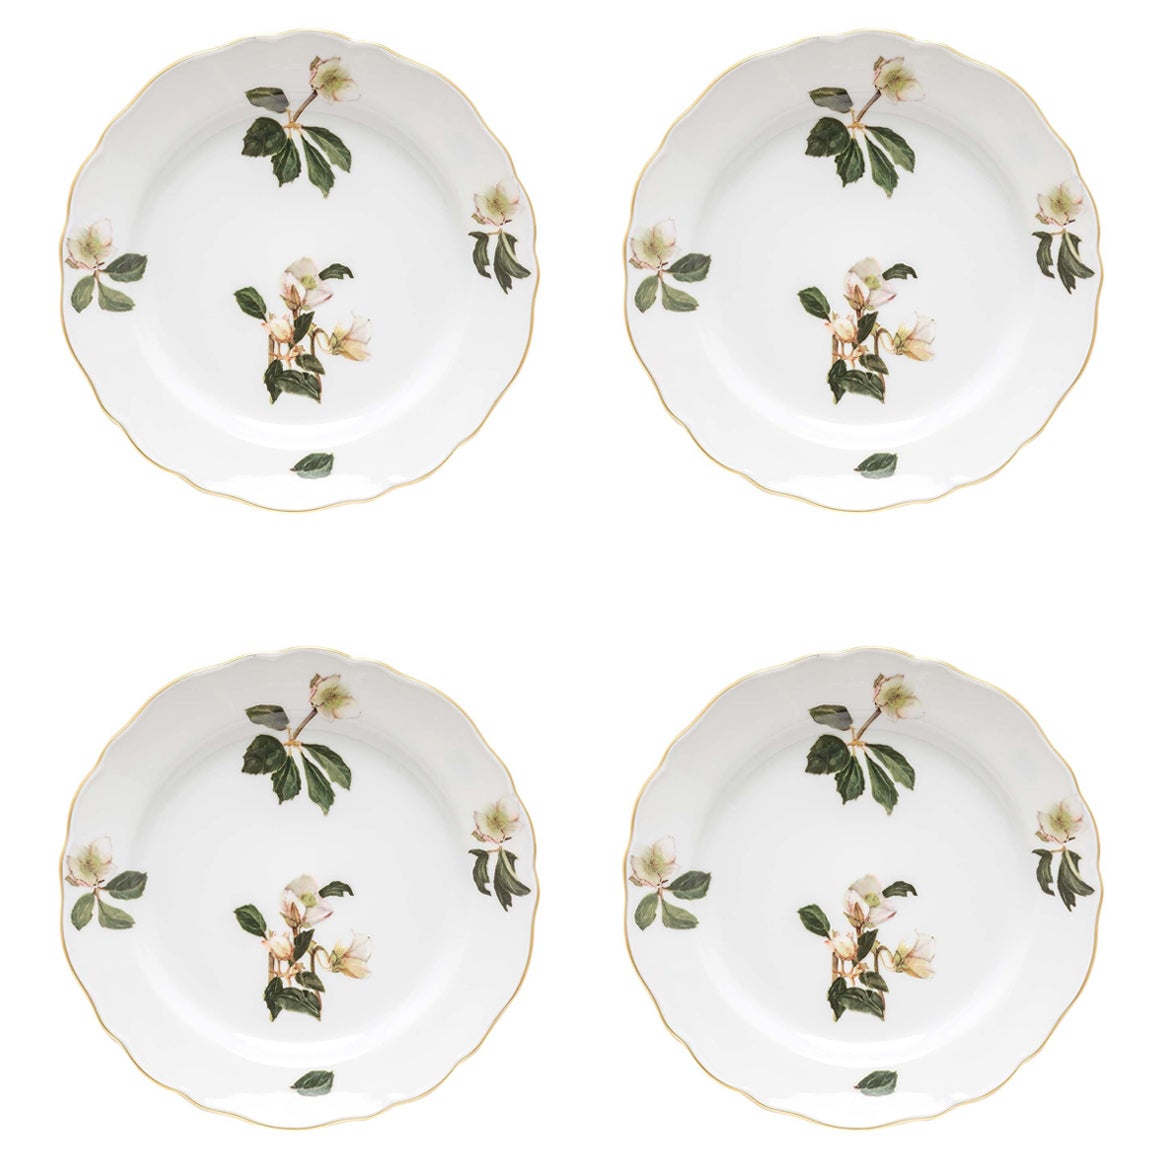 Helleborus Set of 4 Dinner Plates by Paola Caselli